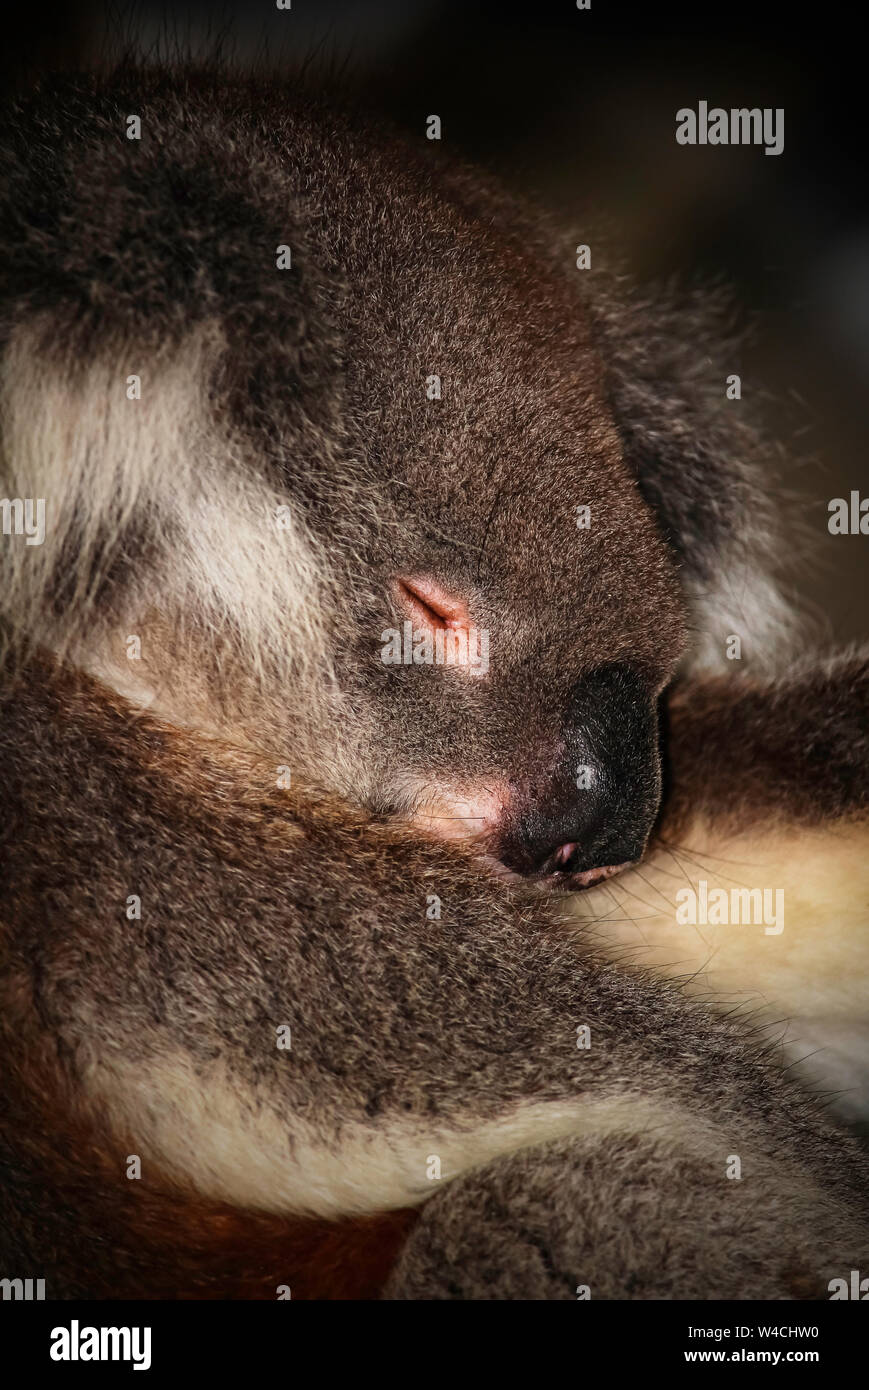 A sleeping Koala at Longleat Safari Park Stock Photo